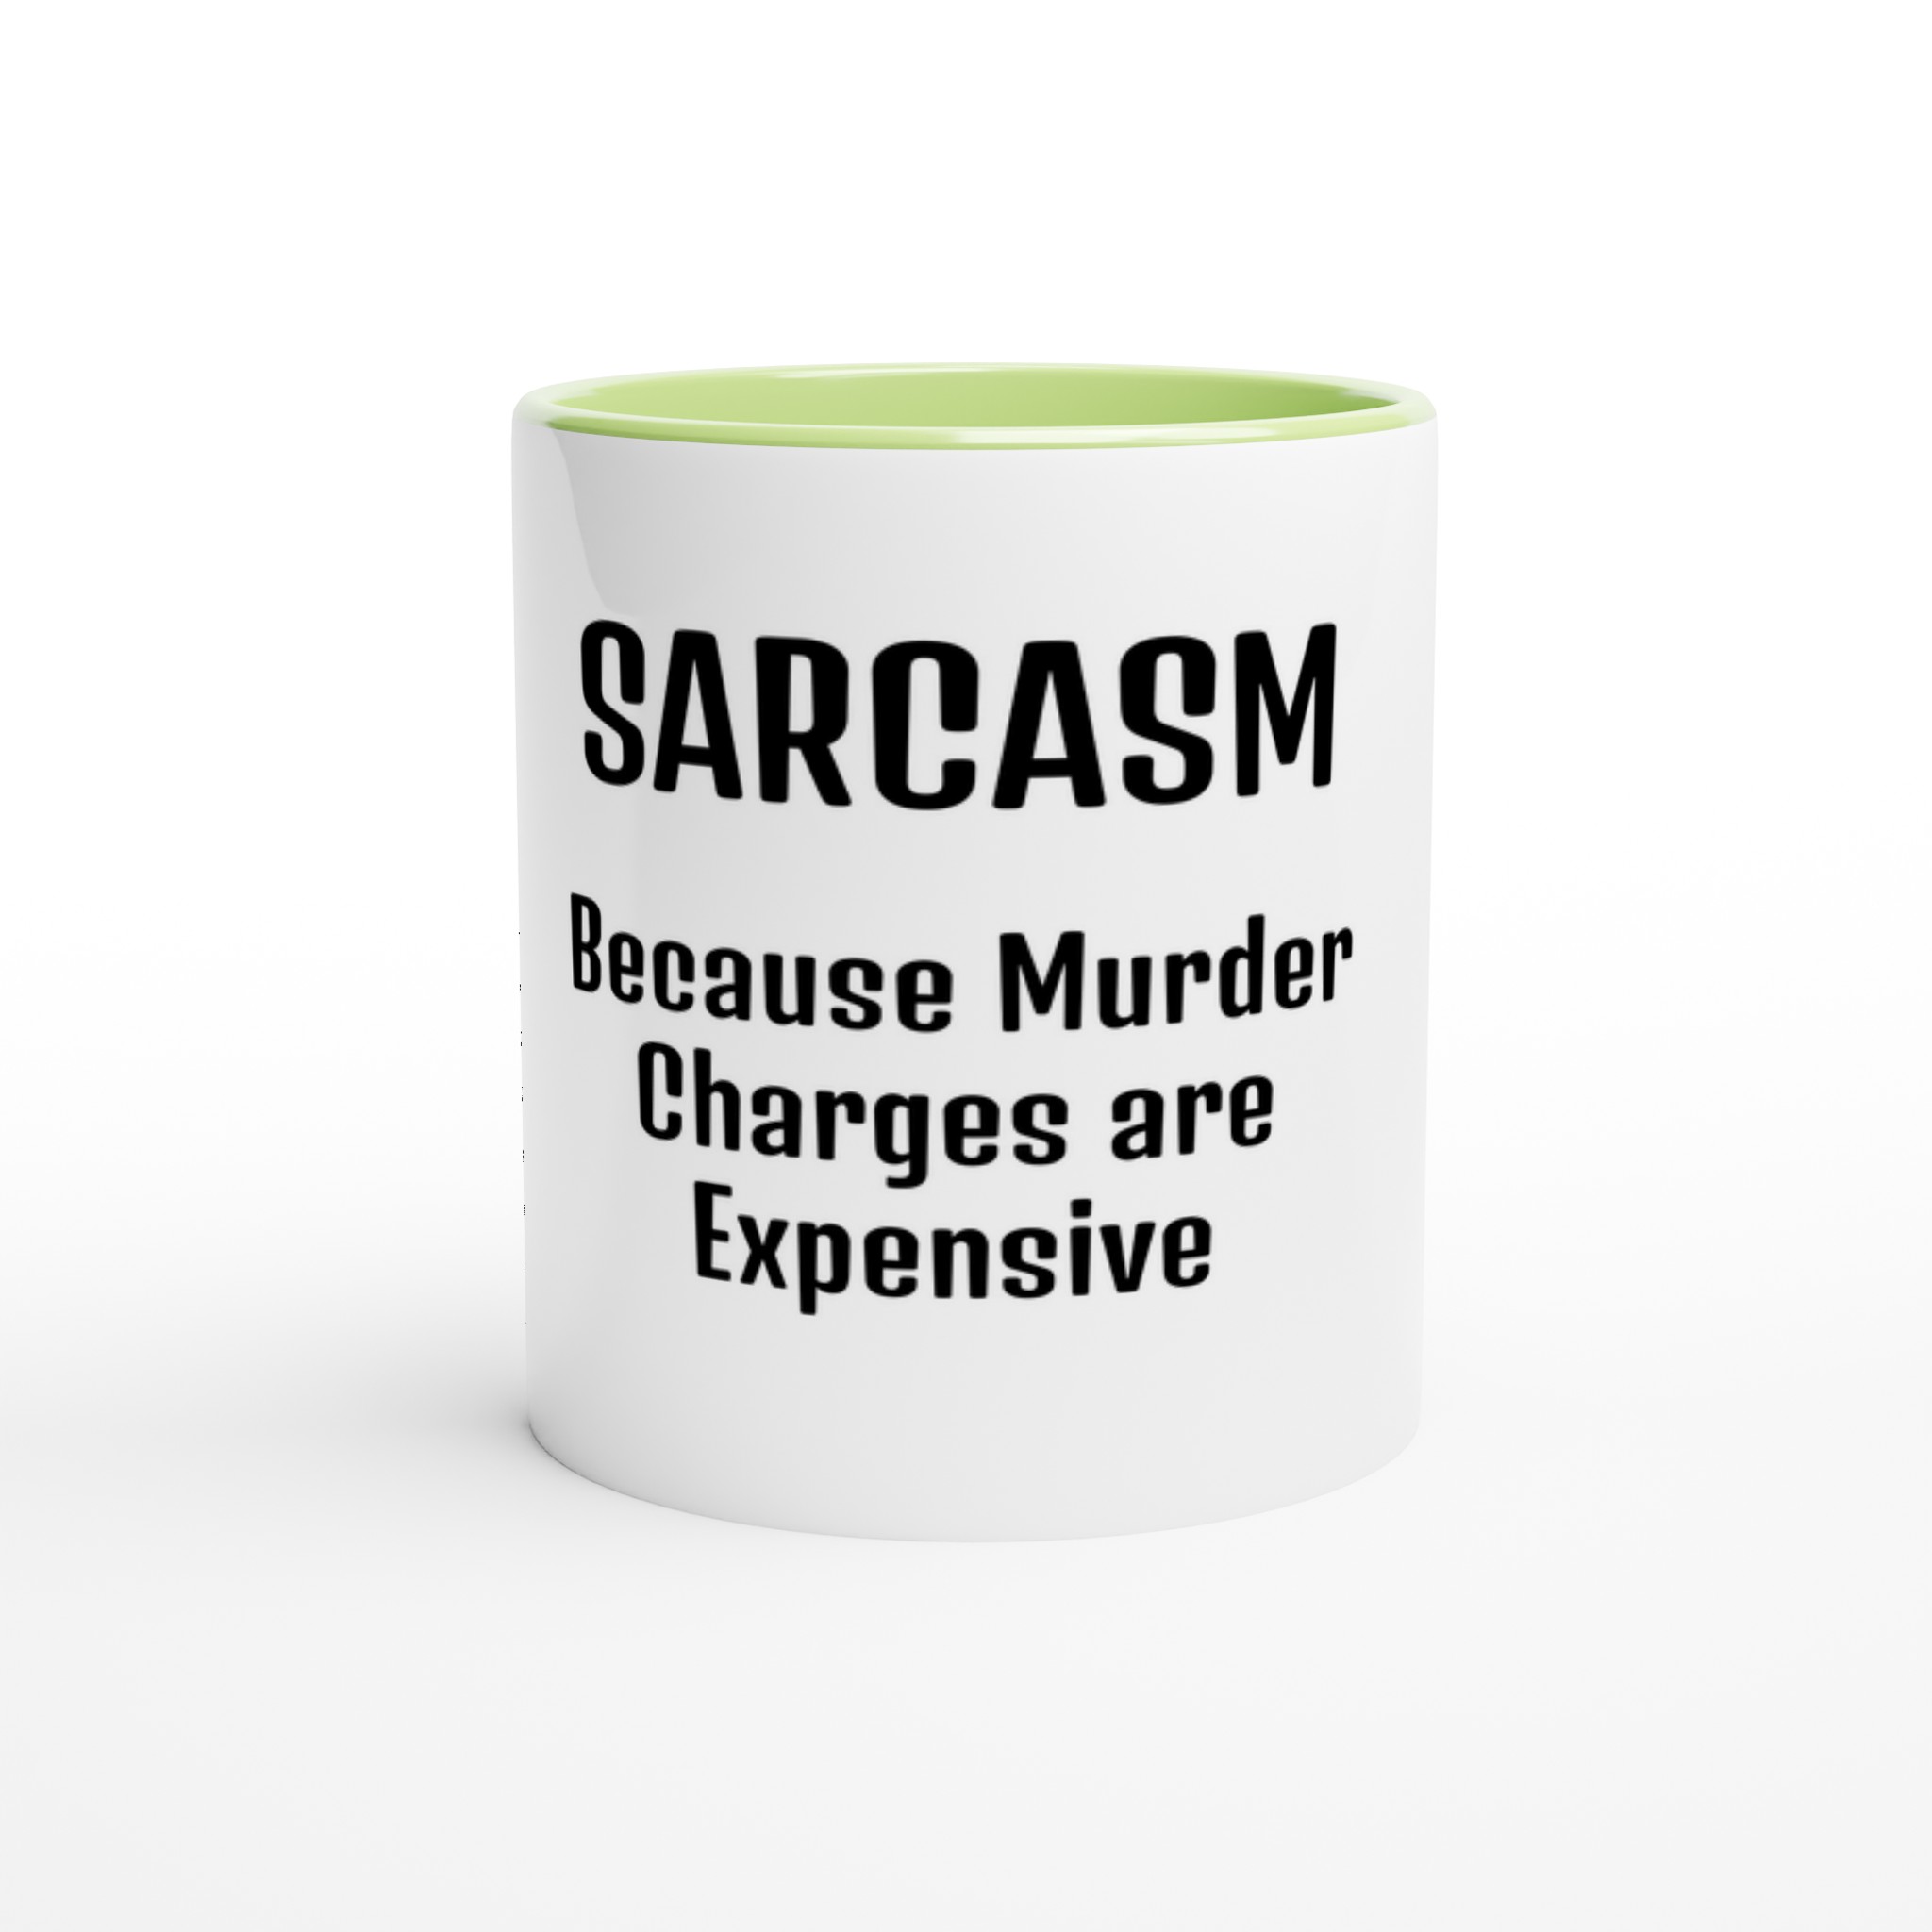 sarcasm mug green